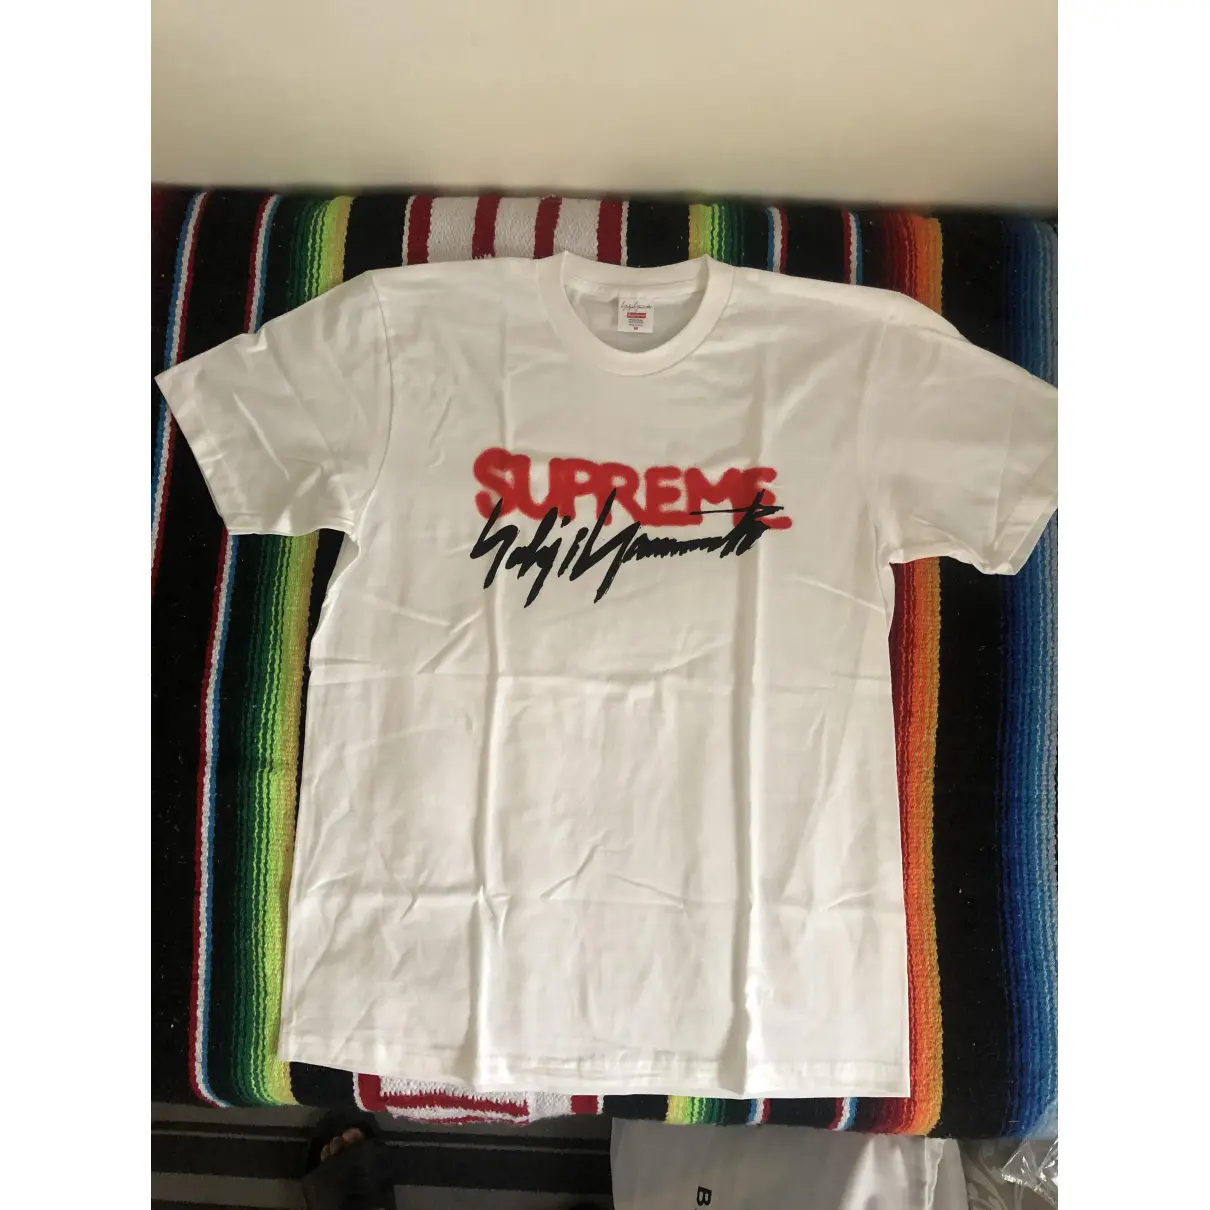 Buy Supreme x Yohji Yamamoto White Cotton T-shirt online